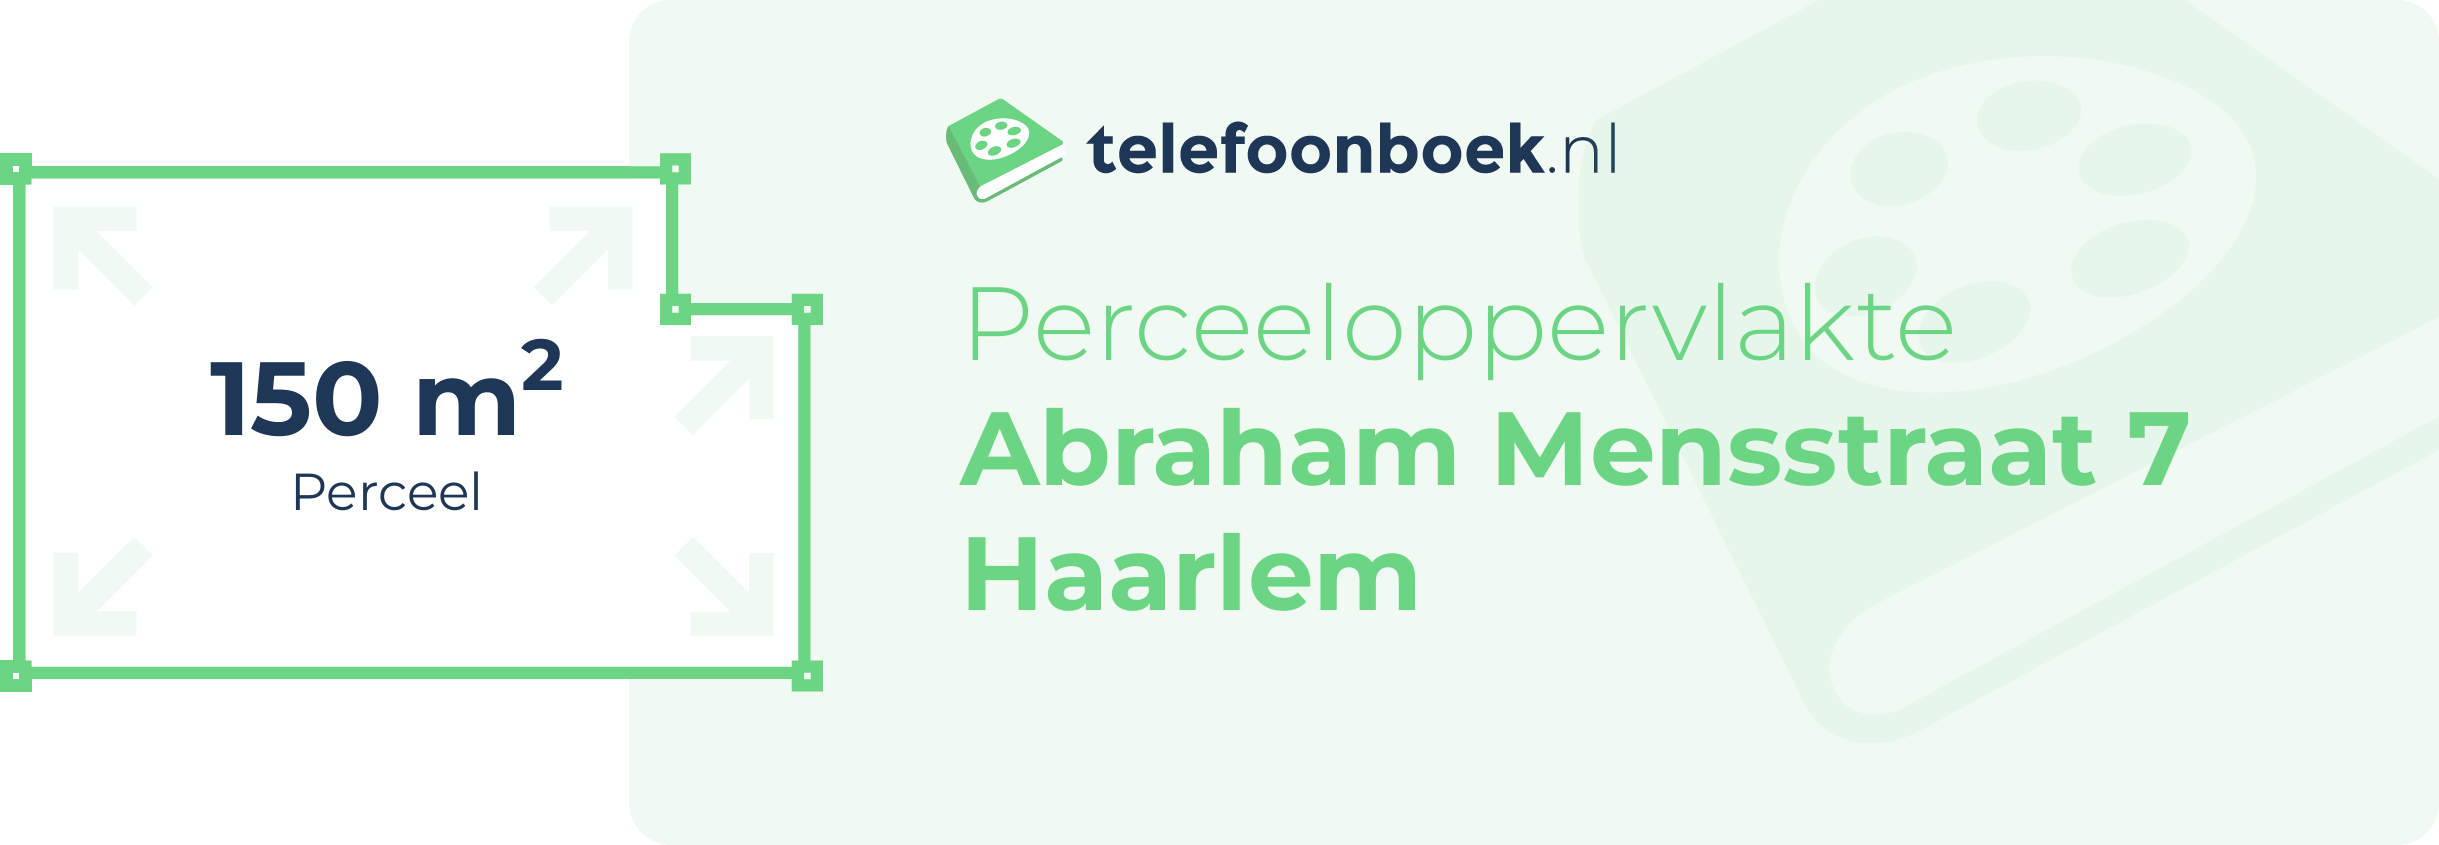 Perceeloppervlakte Abraham Mensstraat 7 Haarlem